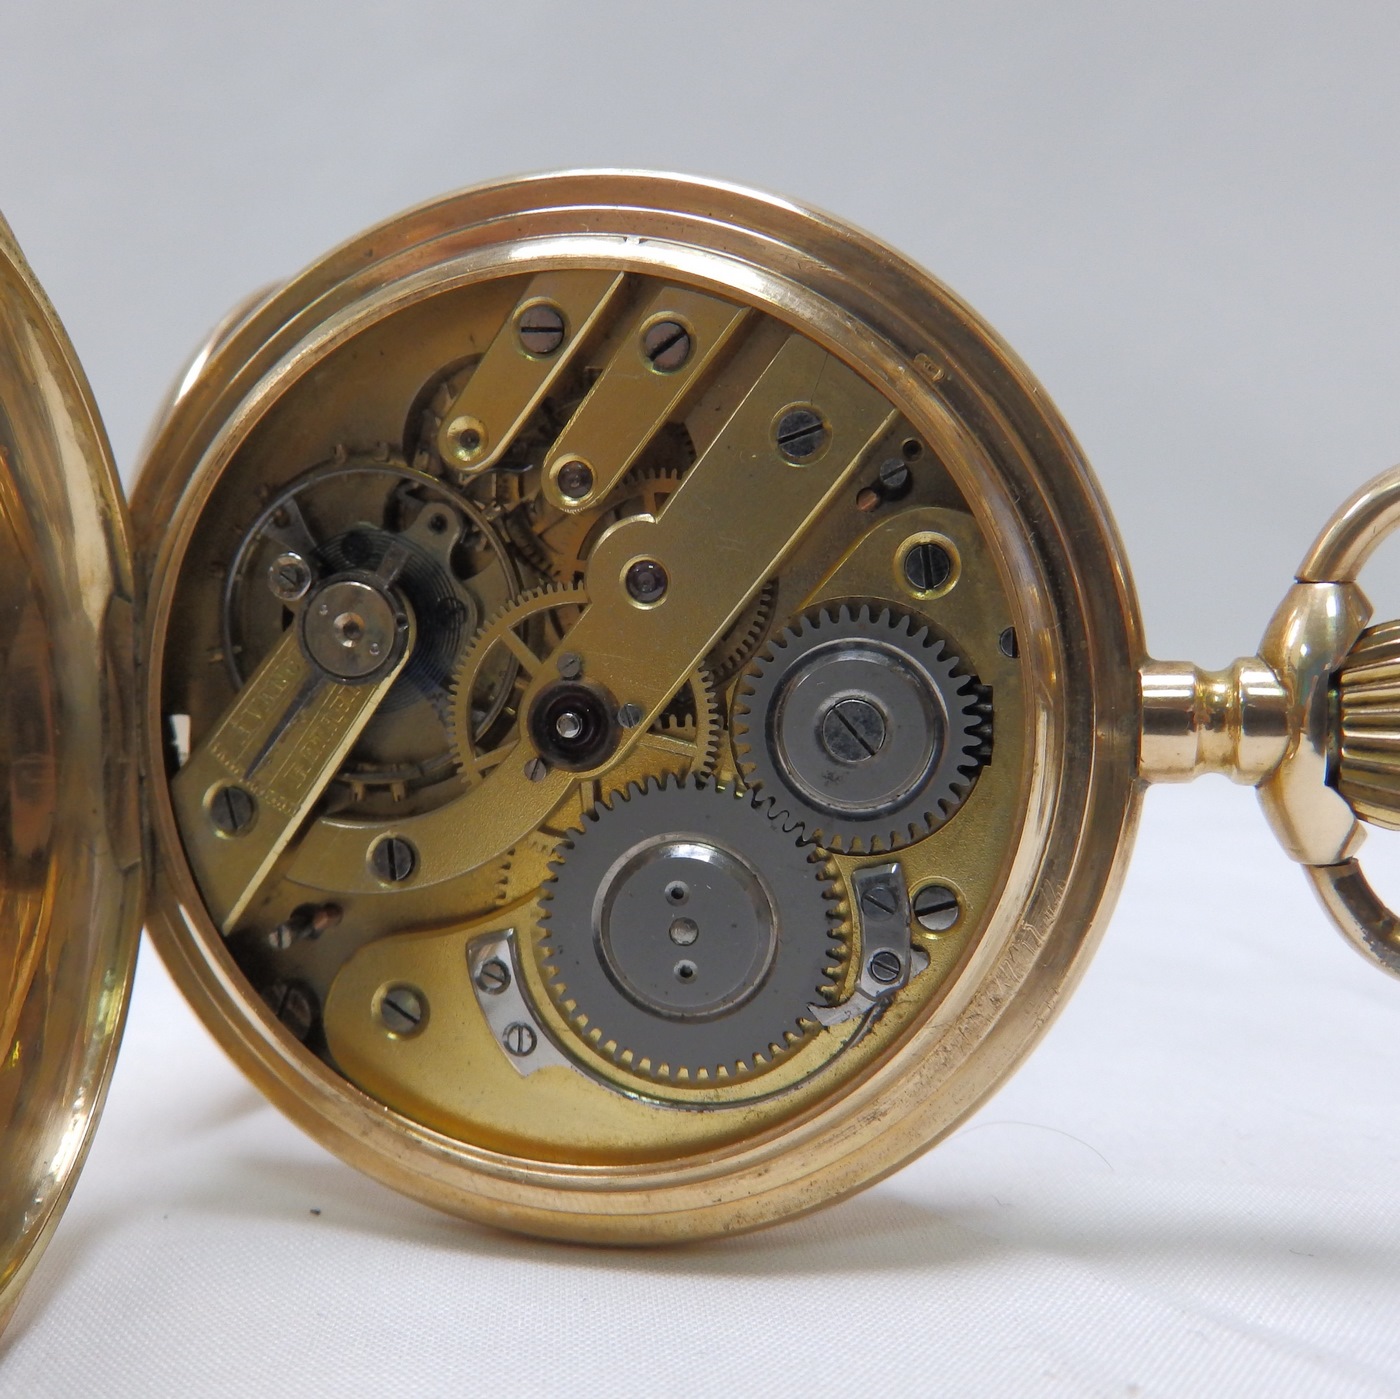 Reloj Suizo de Bolsillo para caballero, saboneta y remontoir. Ca. 1890.